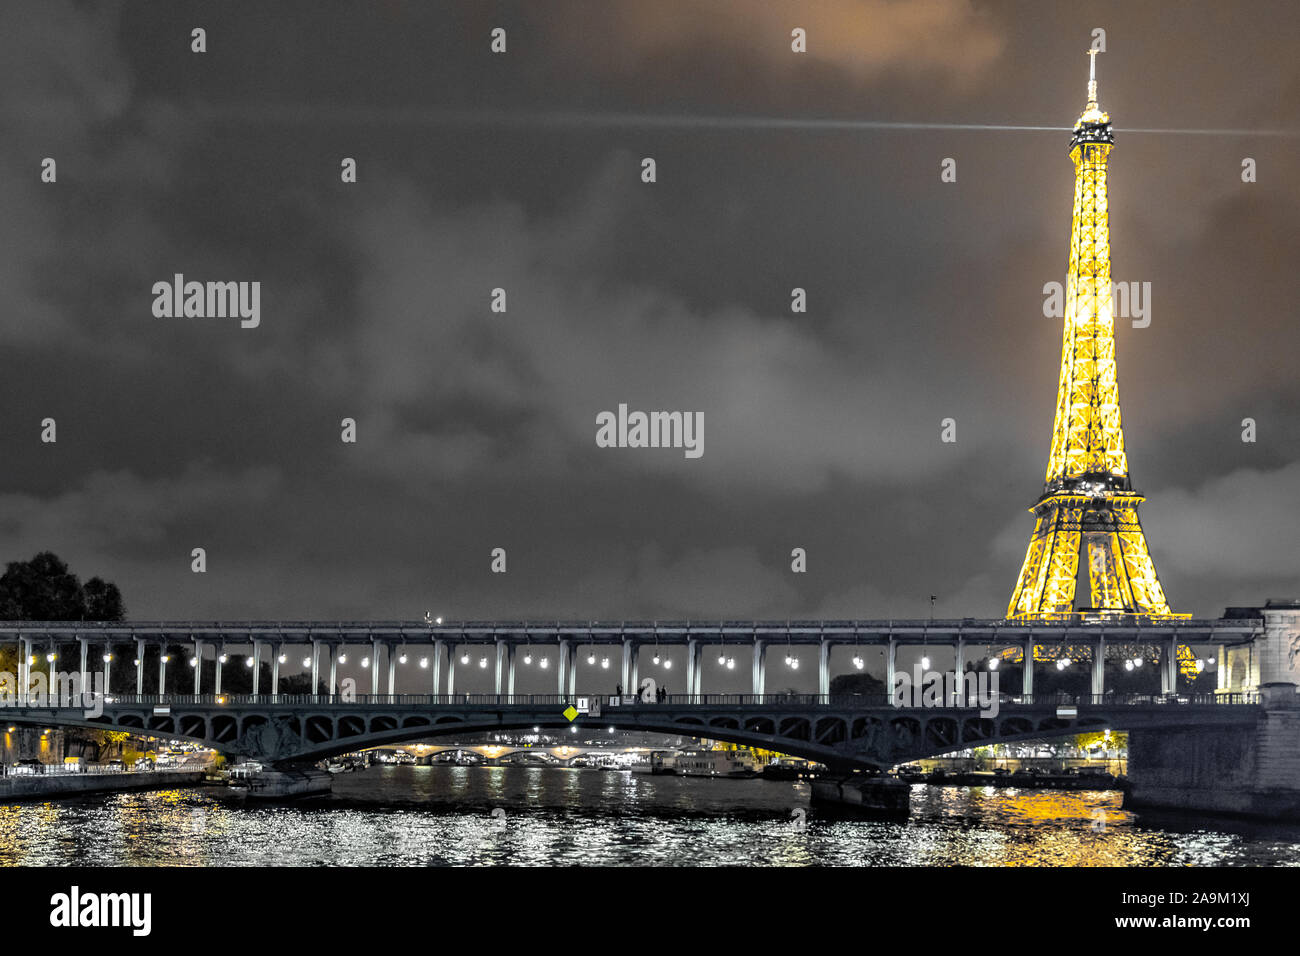 The Eiffel tower at night, Paris, France Stock Photo - Alamy